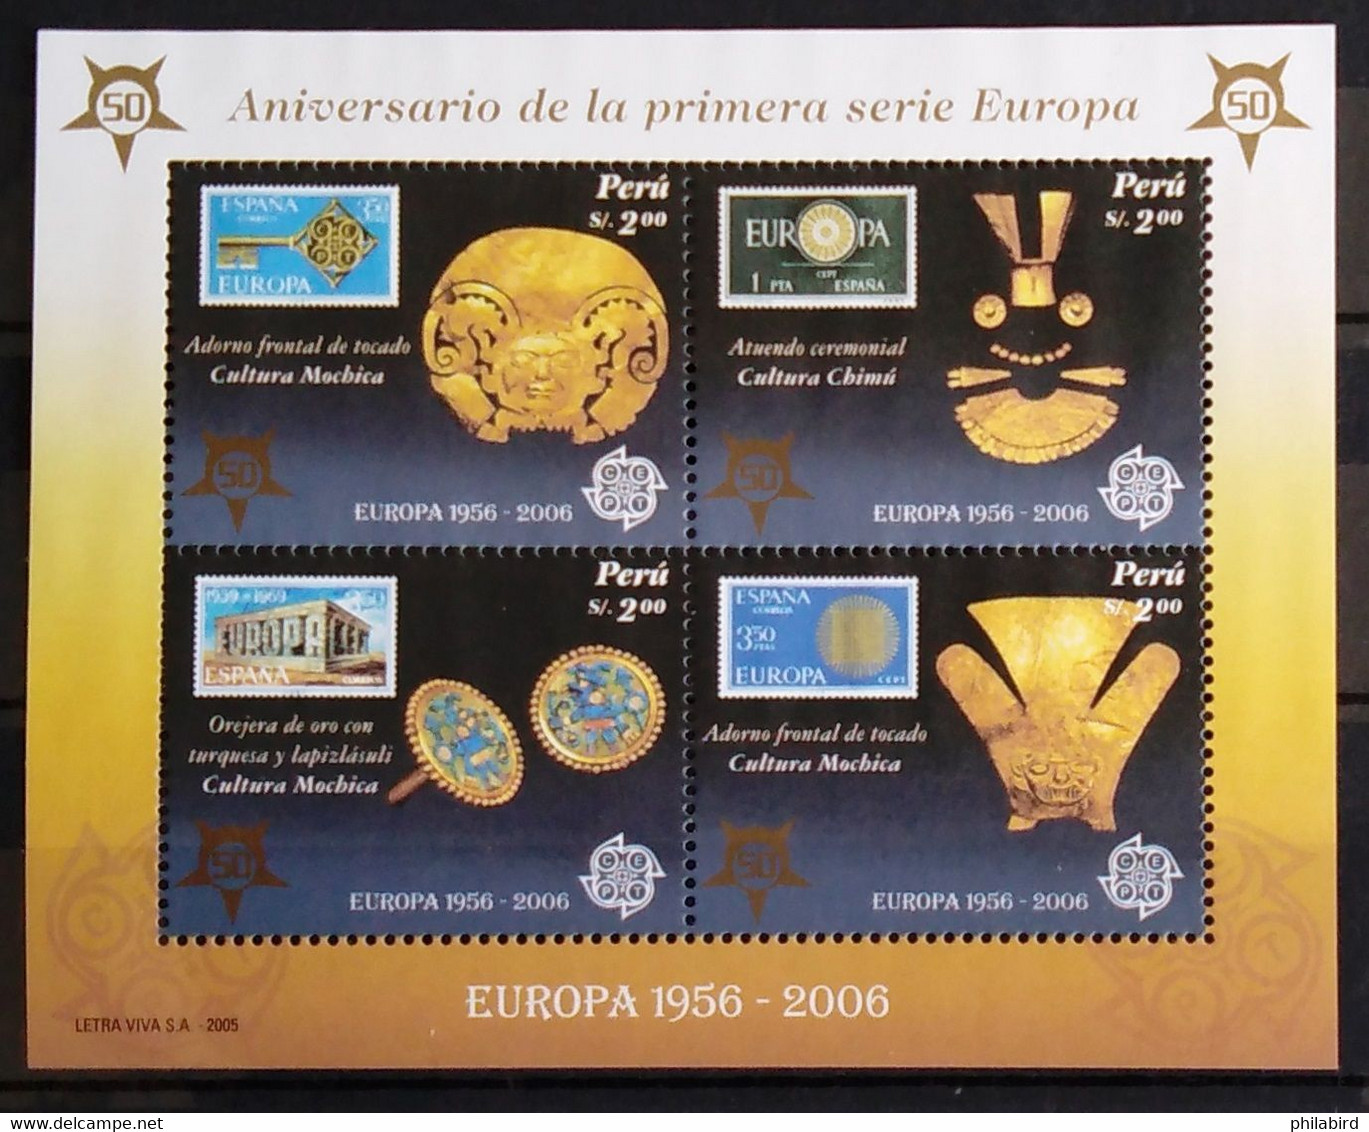 EUROPA 2006 - PEROU          Les 50 Ans Du 1° Timbre EUROPA             B.F 30              NEUF** - 2006